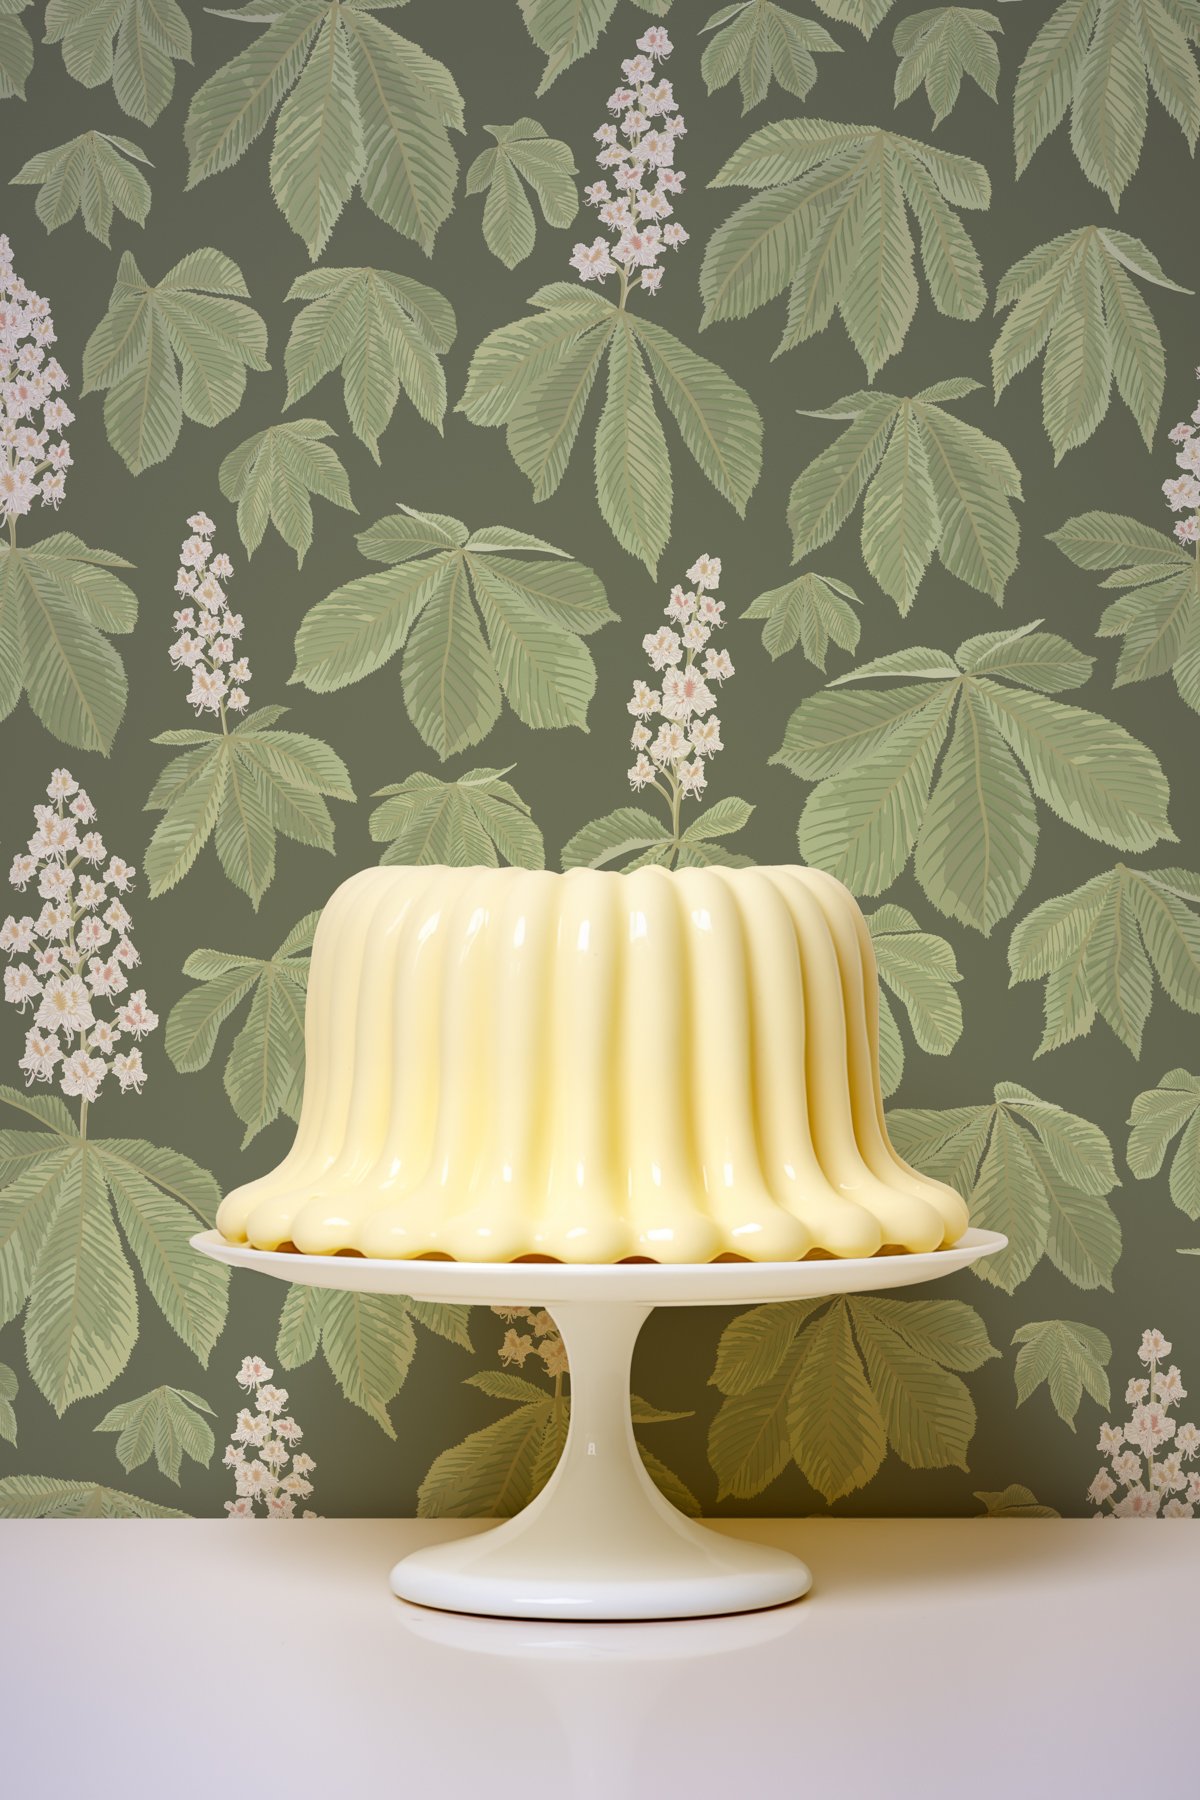 Kate Golding Horse Chestnut Blossom (Green) Wallpaper.  Modern wallcoverings and interior decor.  